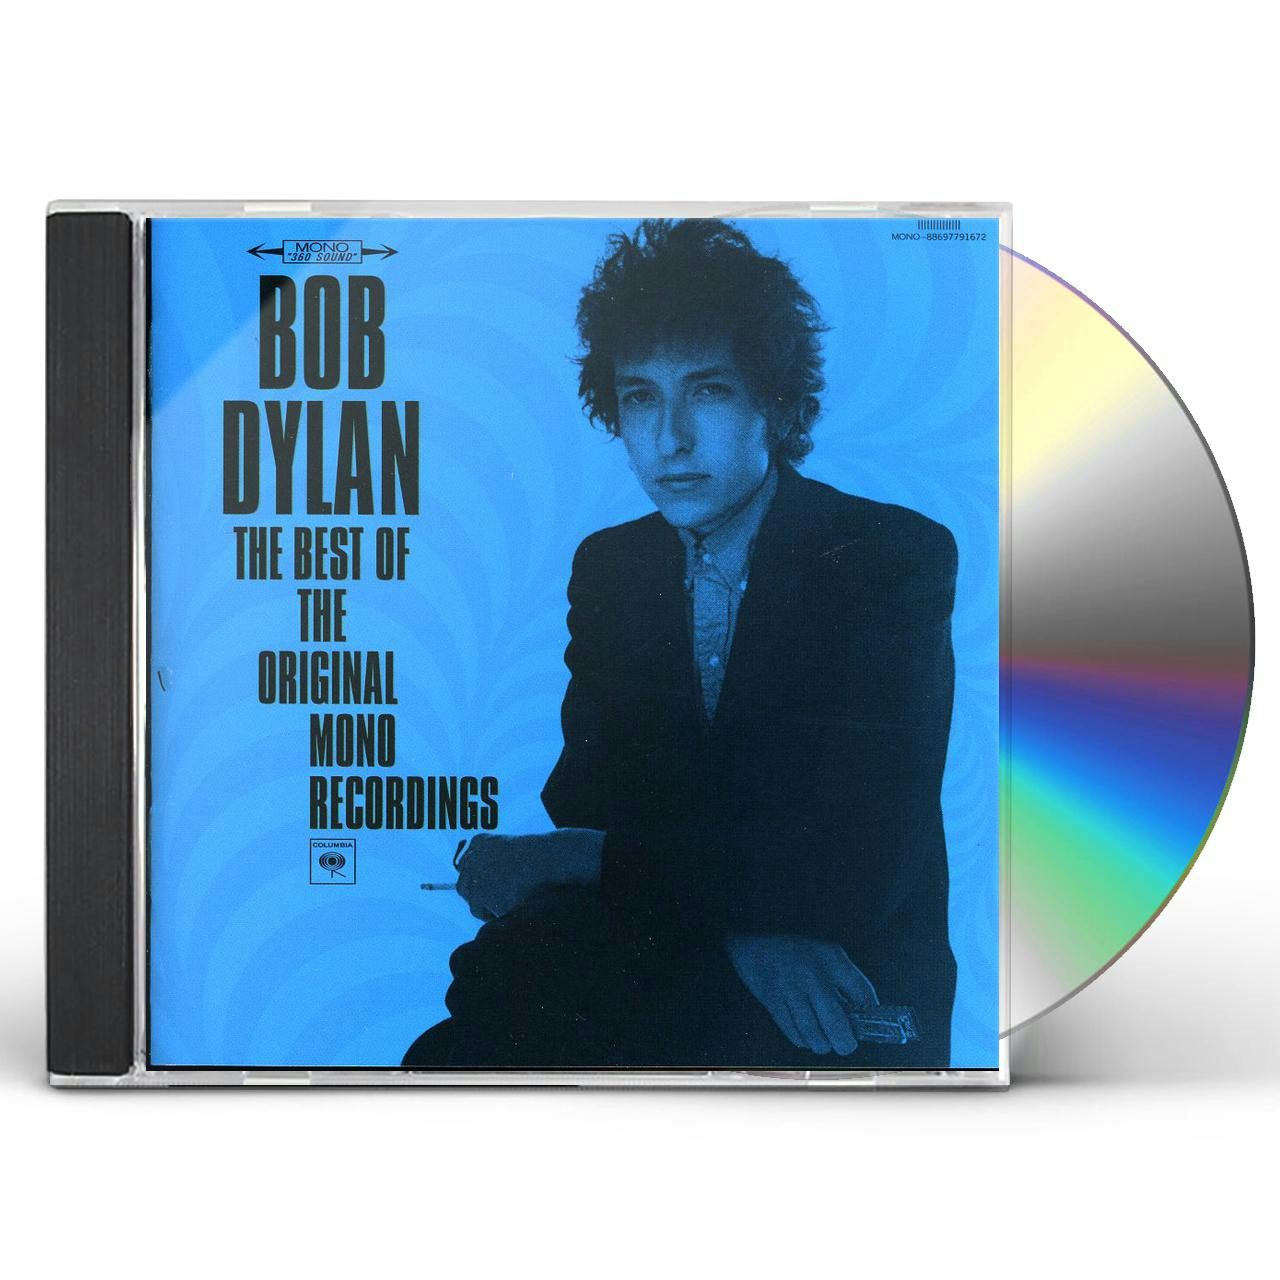 Bob Dylan BEST OF THE ORIGINAL MONO RECORDINGS CD